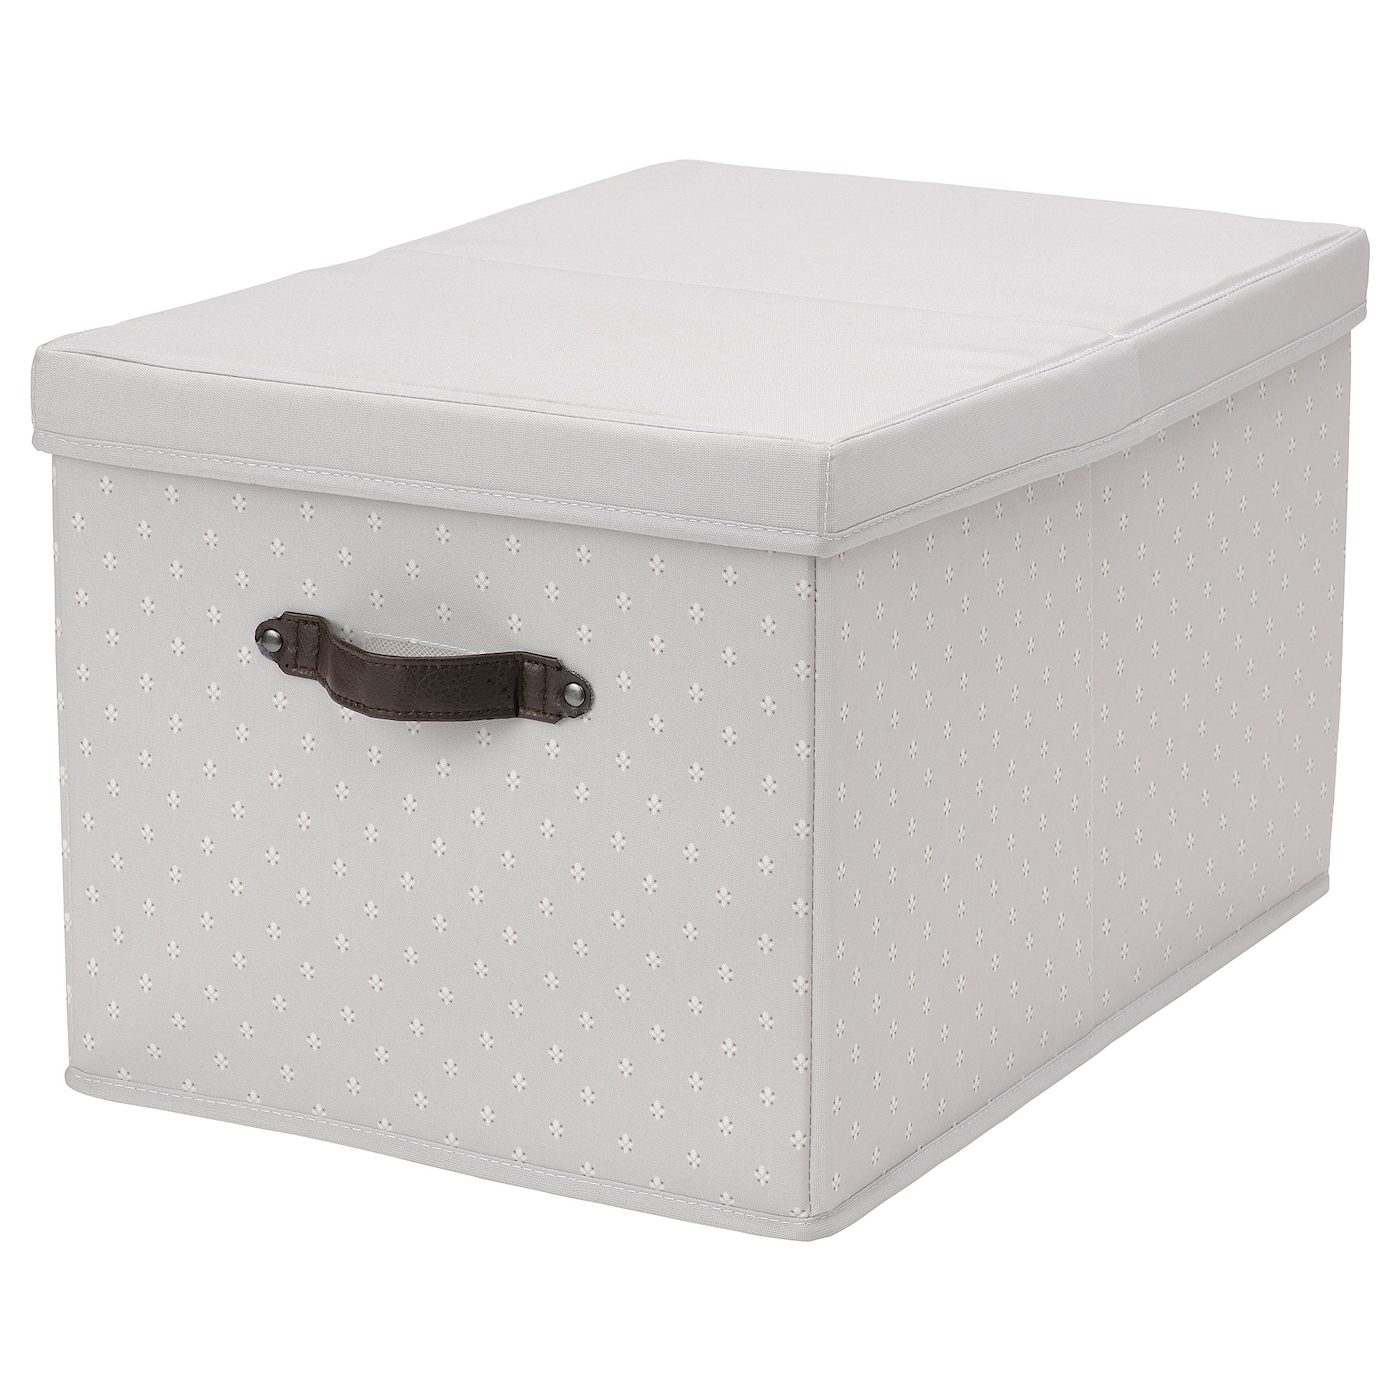 BLÄDDRARE БЛЭДДРАРЕ Коробка с крышкой, серый/с рисунком, 35x50x30 см IKEA